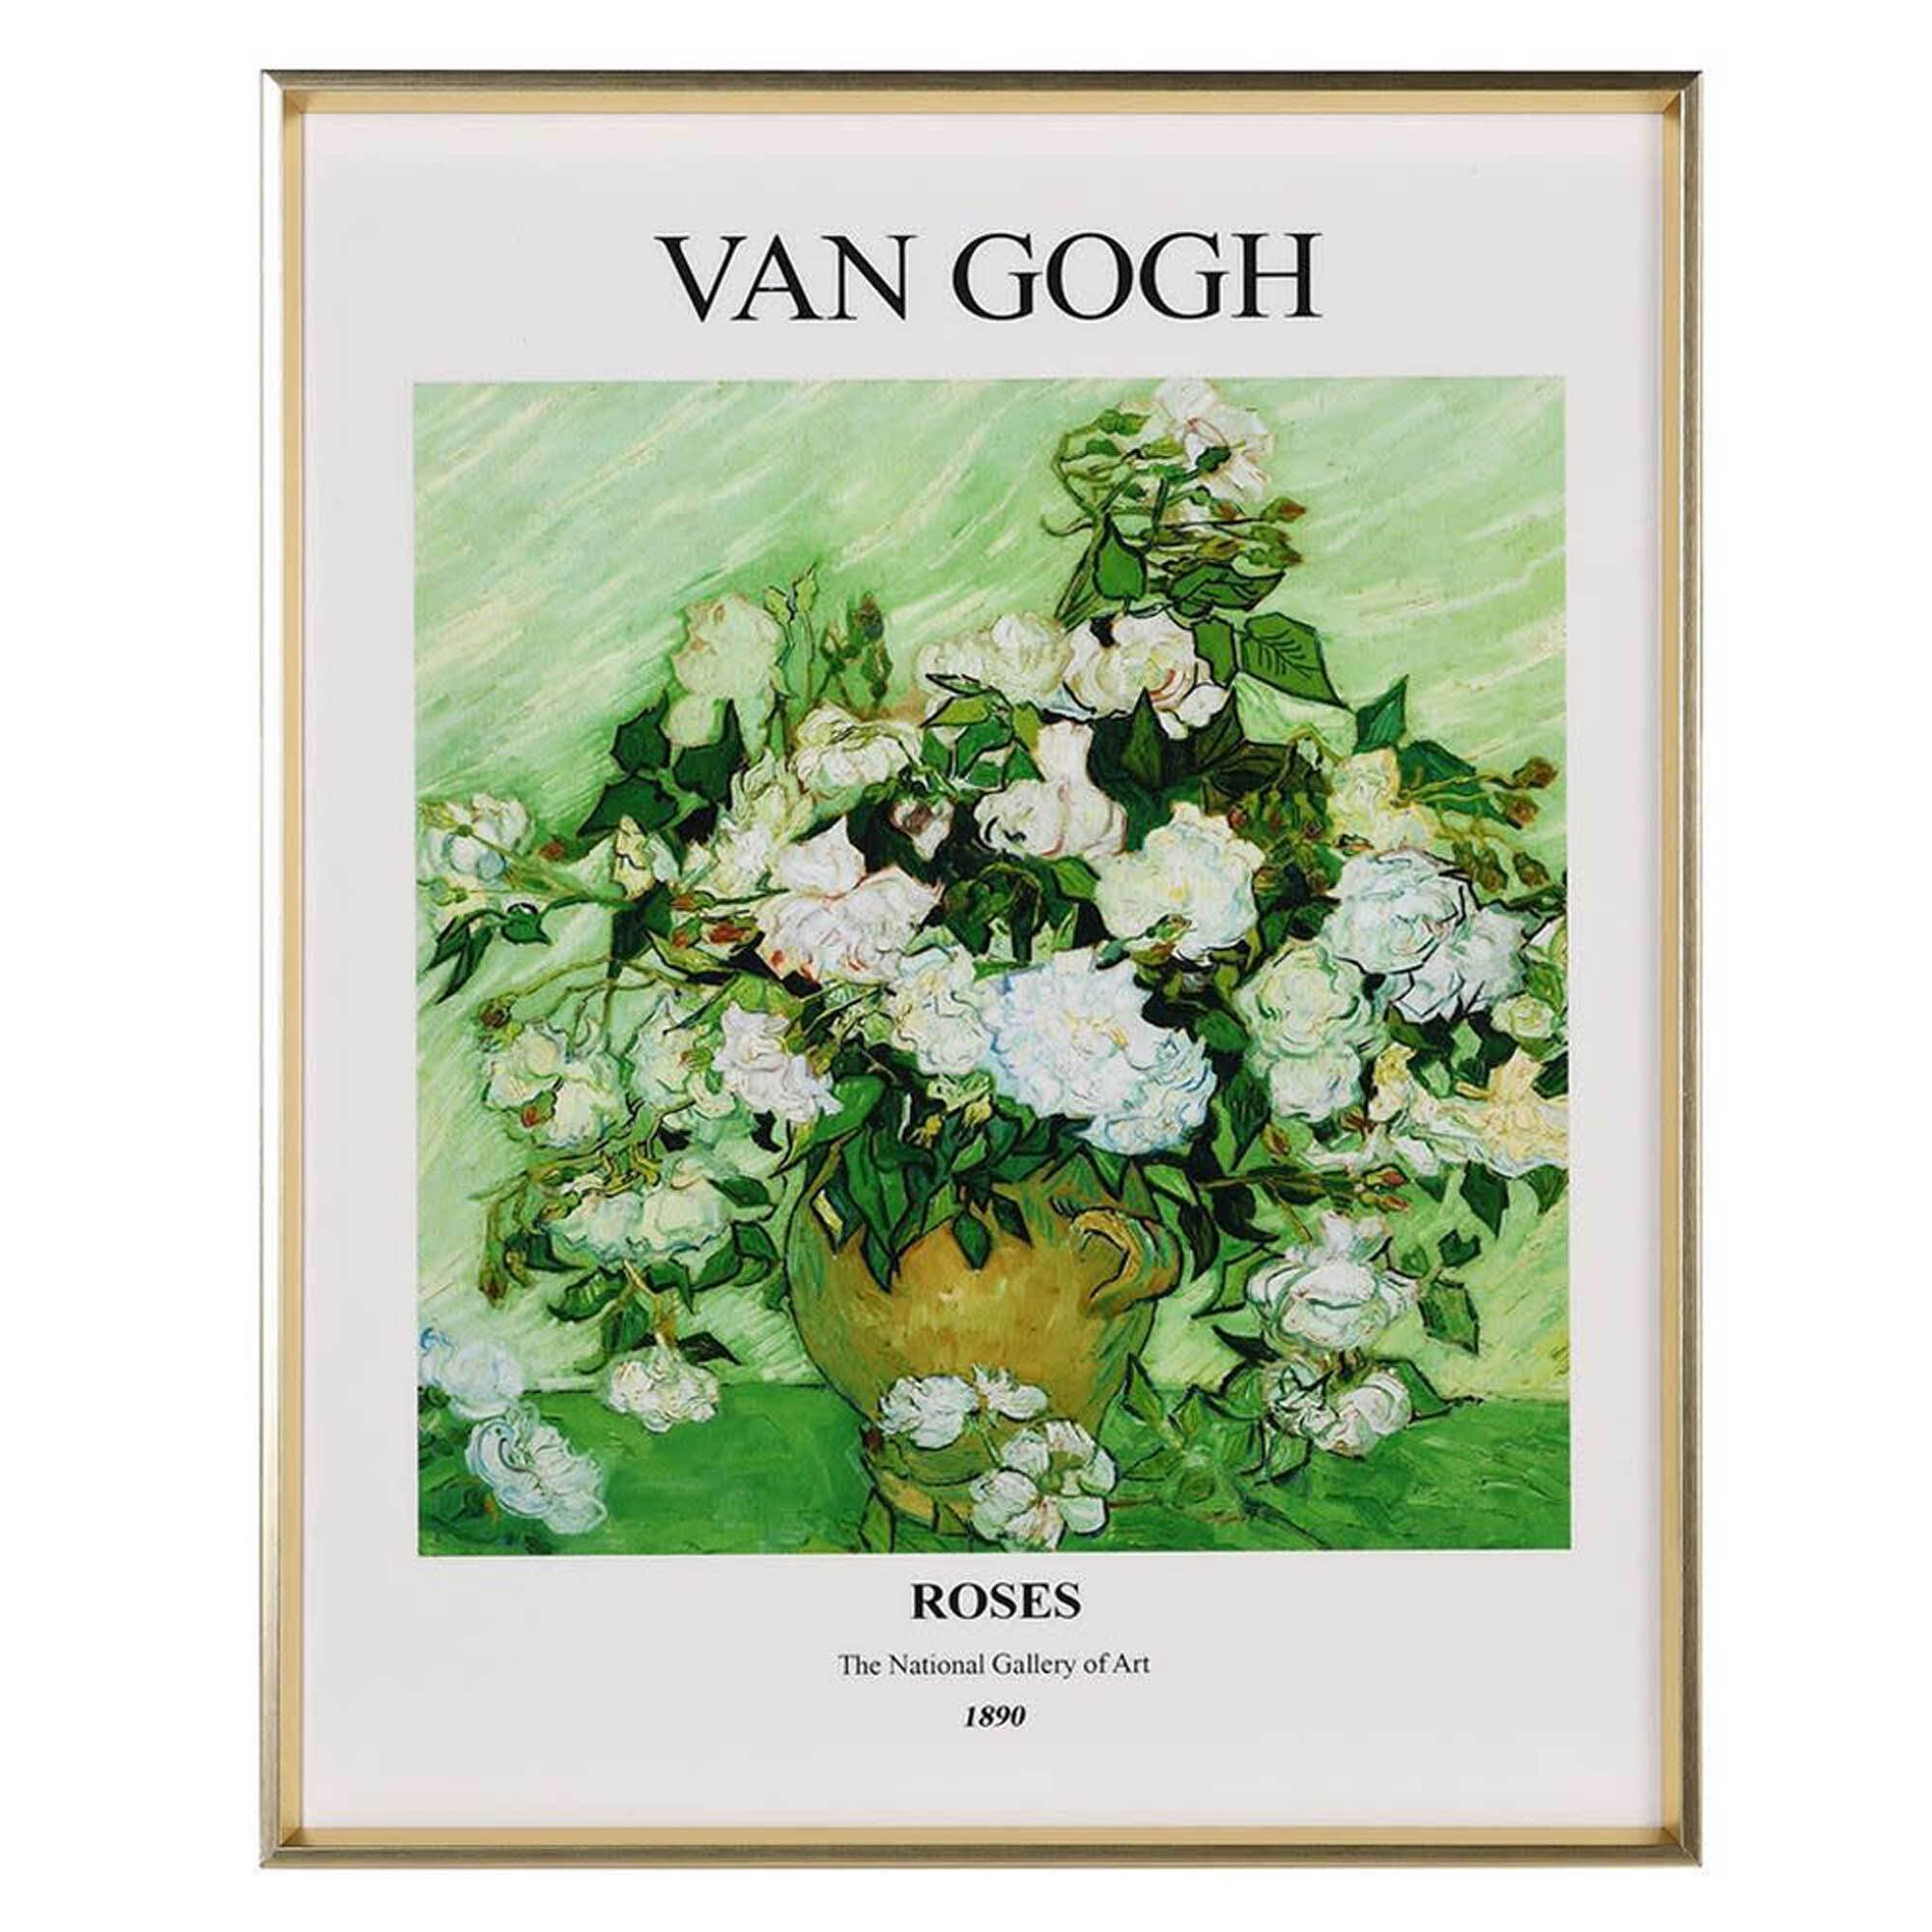 Van Gogh Roses Framed Print, Square, Green Wood - Barker & Stonehouse - image 1